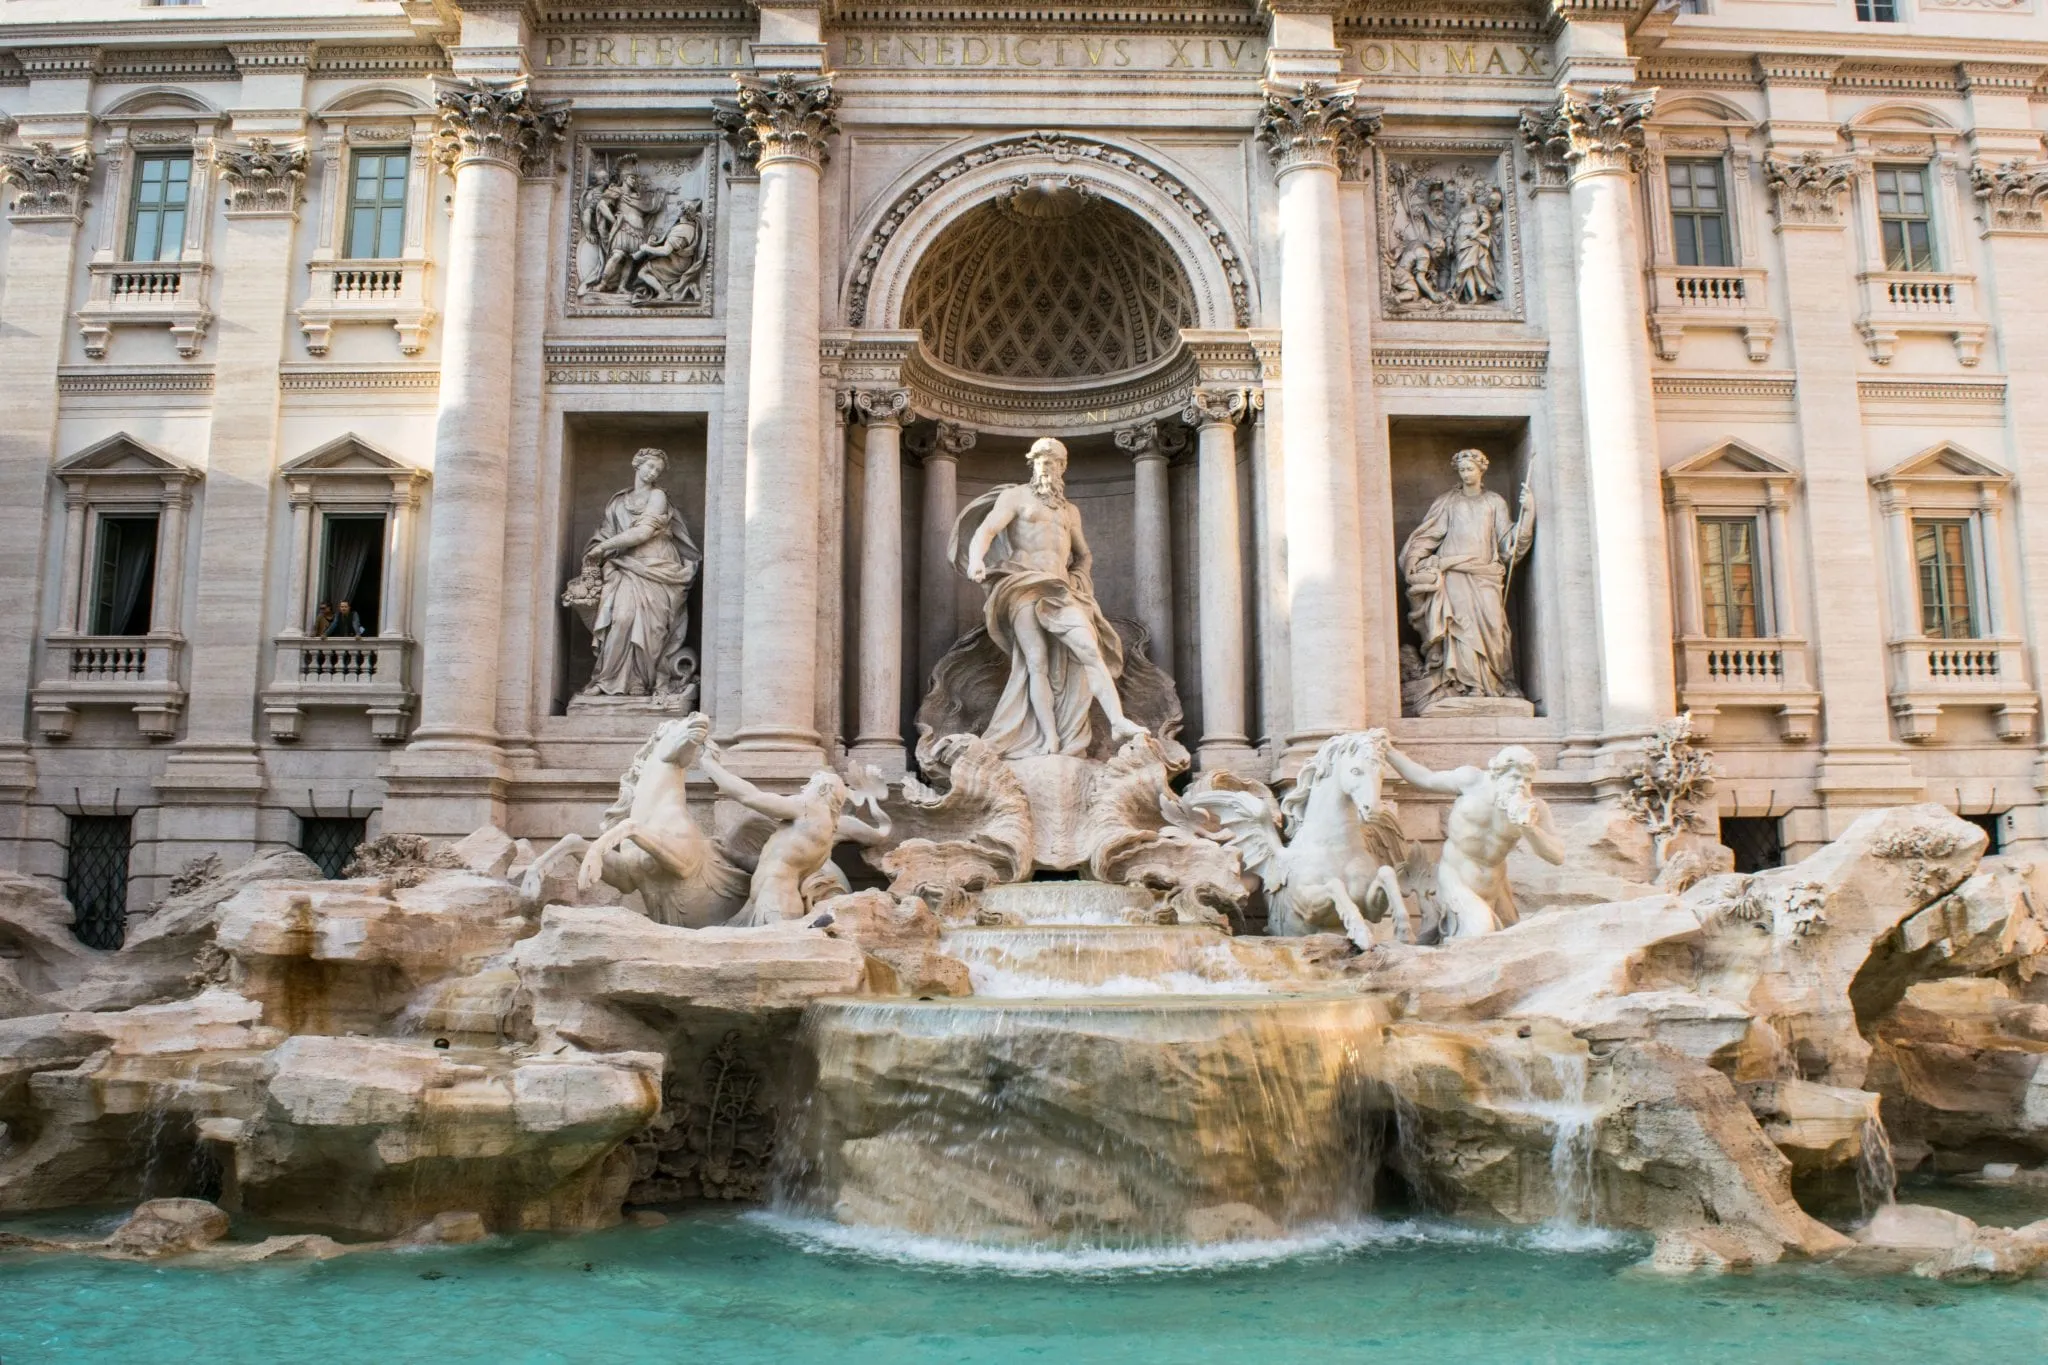 2 Days in Rome: Trevi Fountain